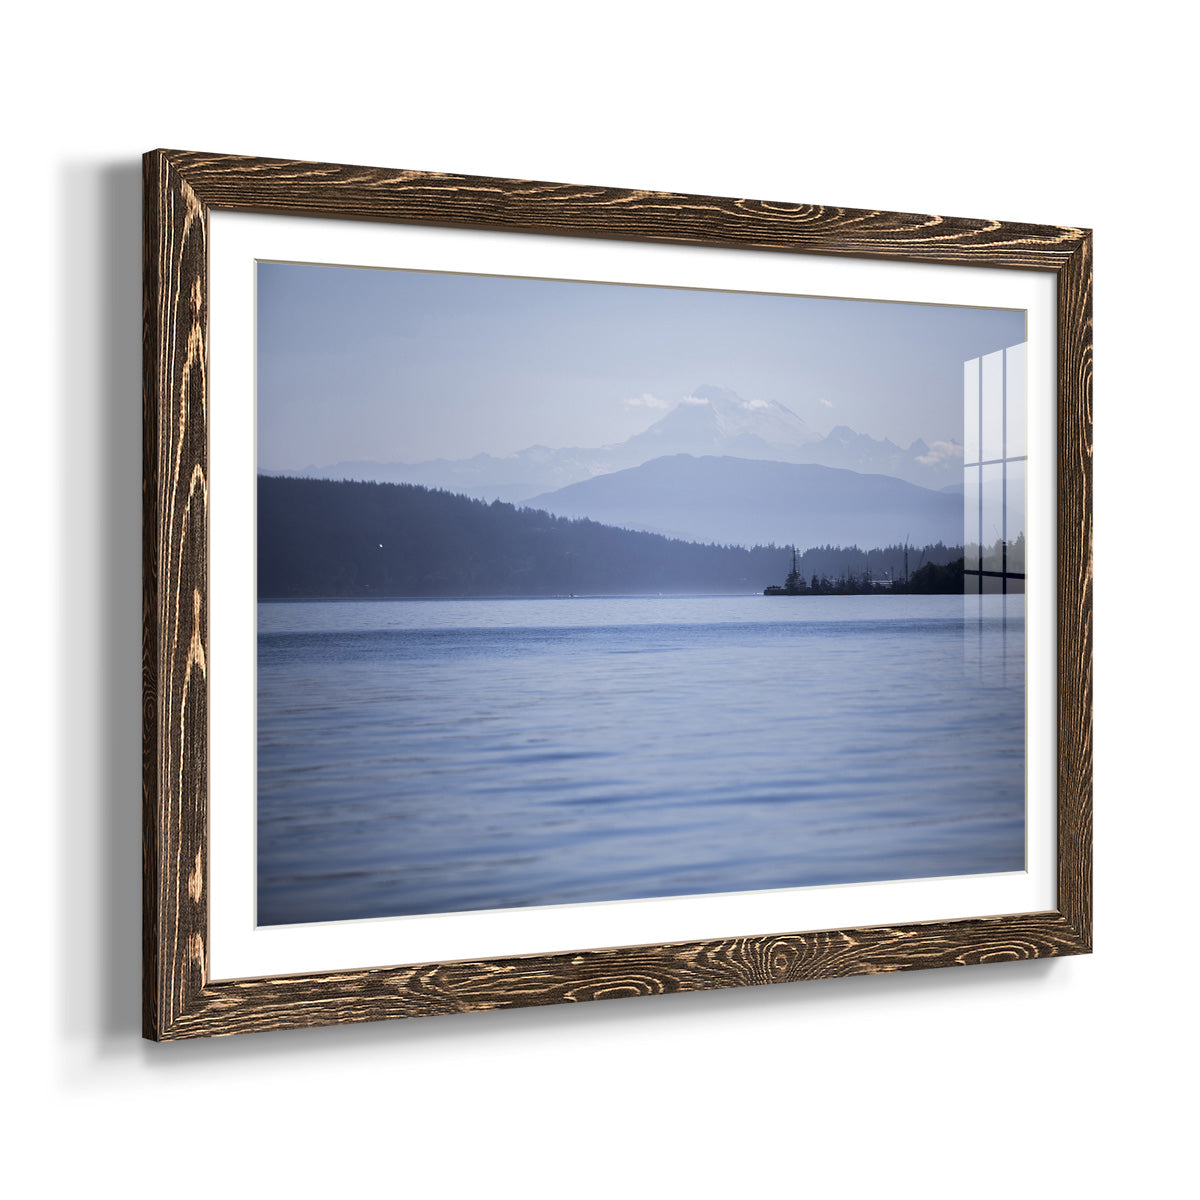 Blue Serenity-Premium Framed Print - Ready to Hang